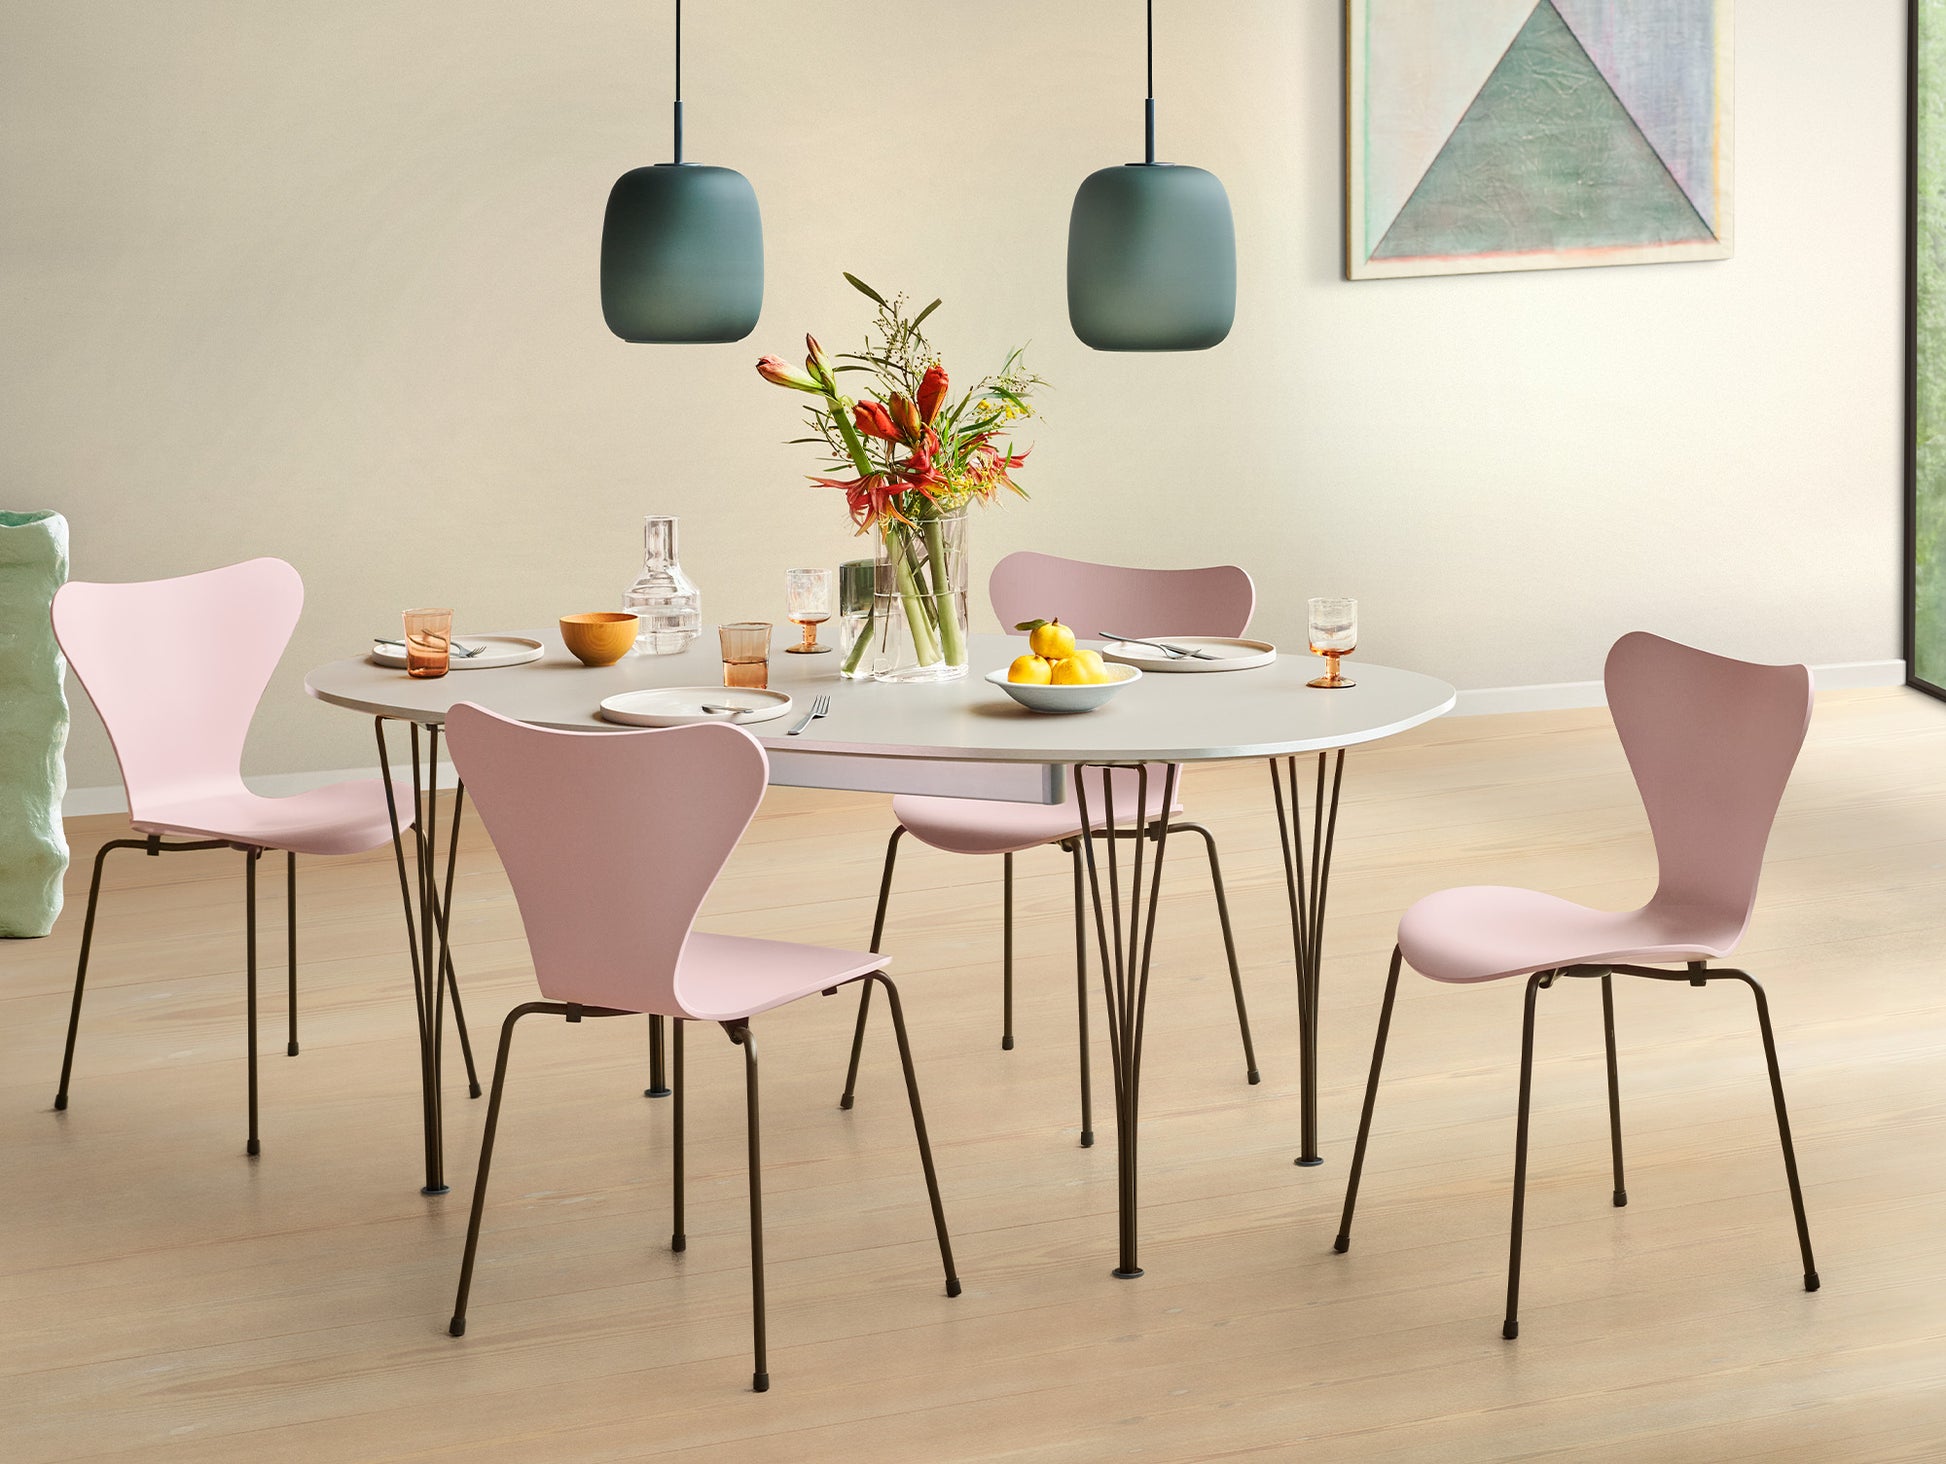 Series 7™ 3107 Dining Chair by Fritz Hansen